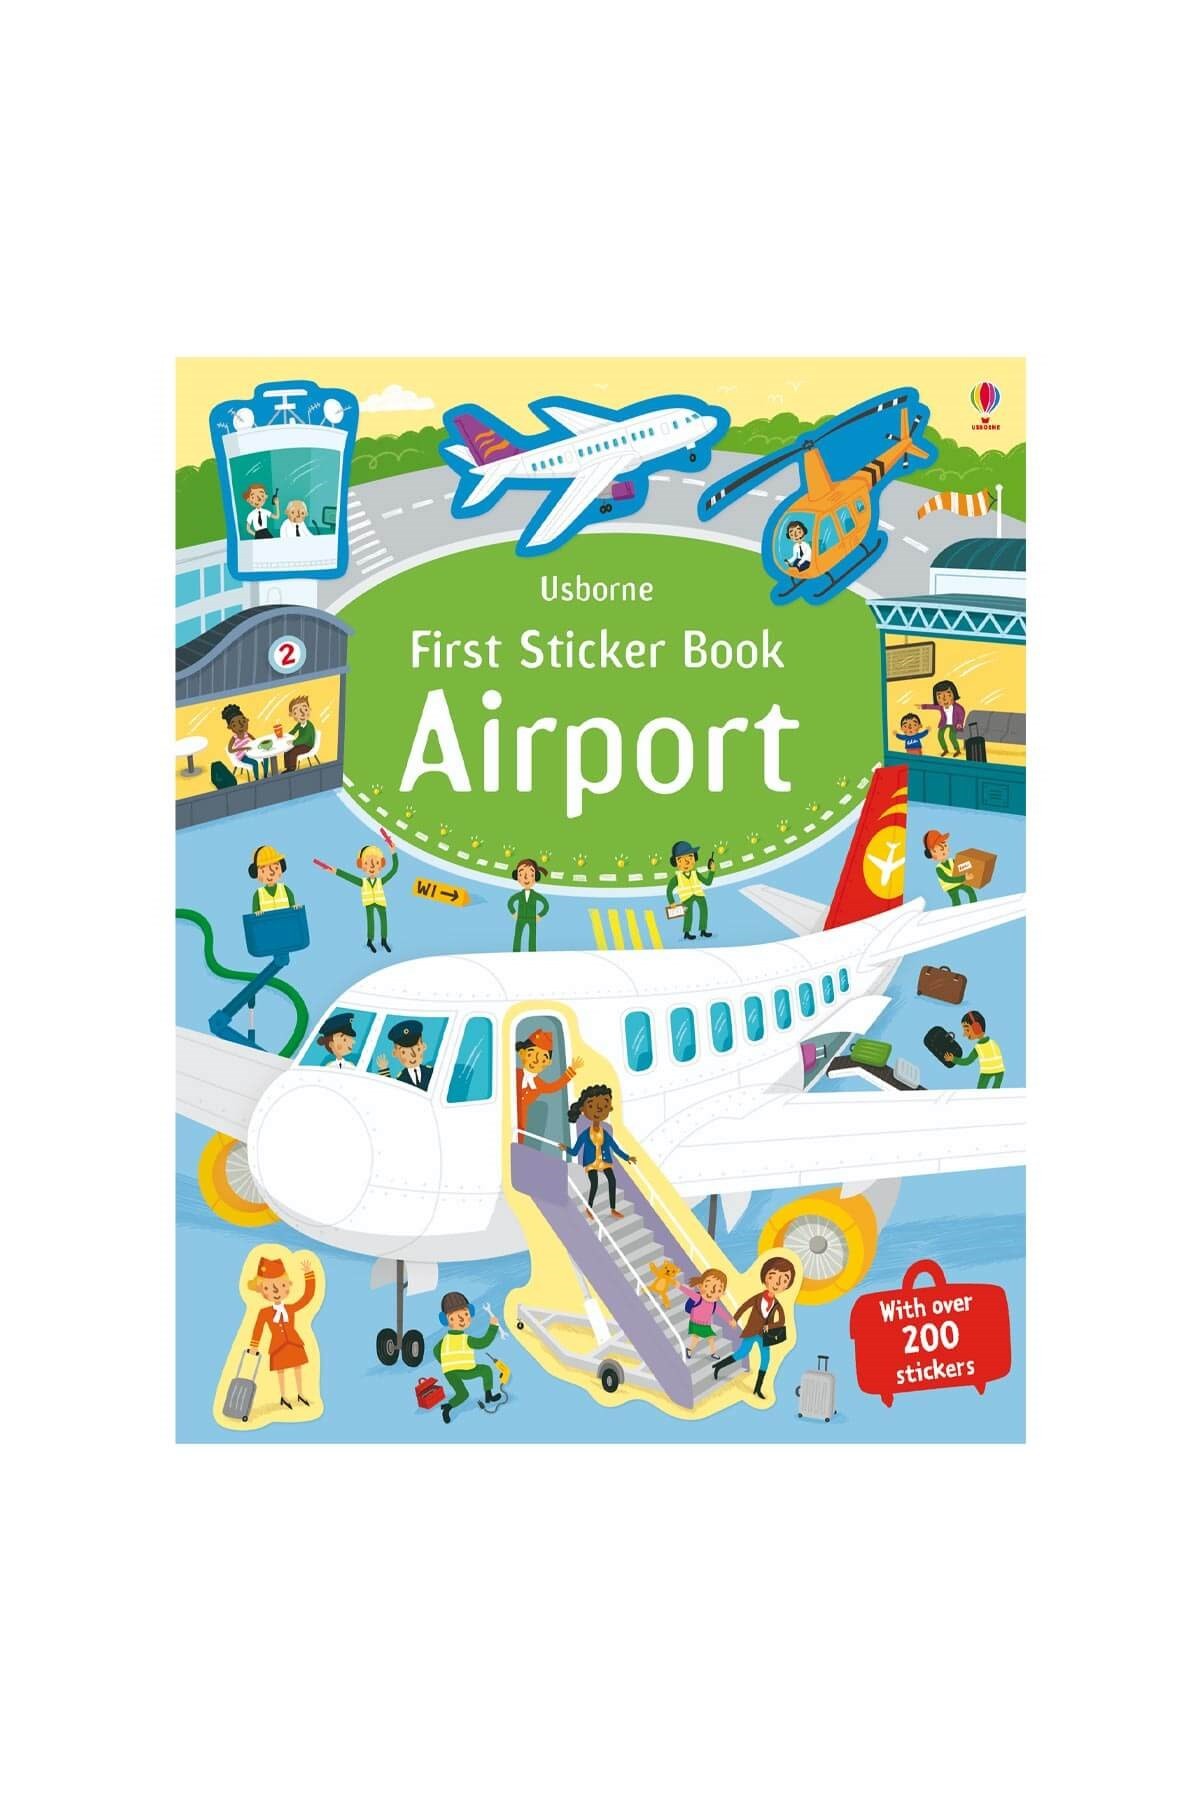 The Usborne First Sticker Book Airports